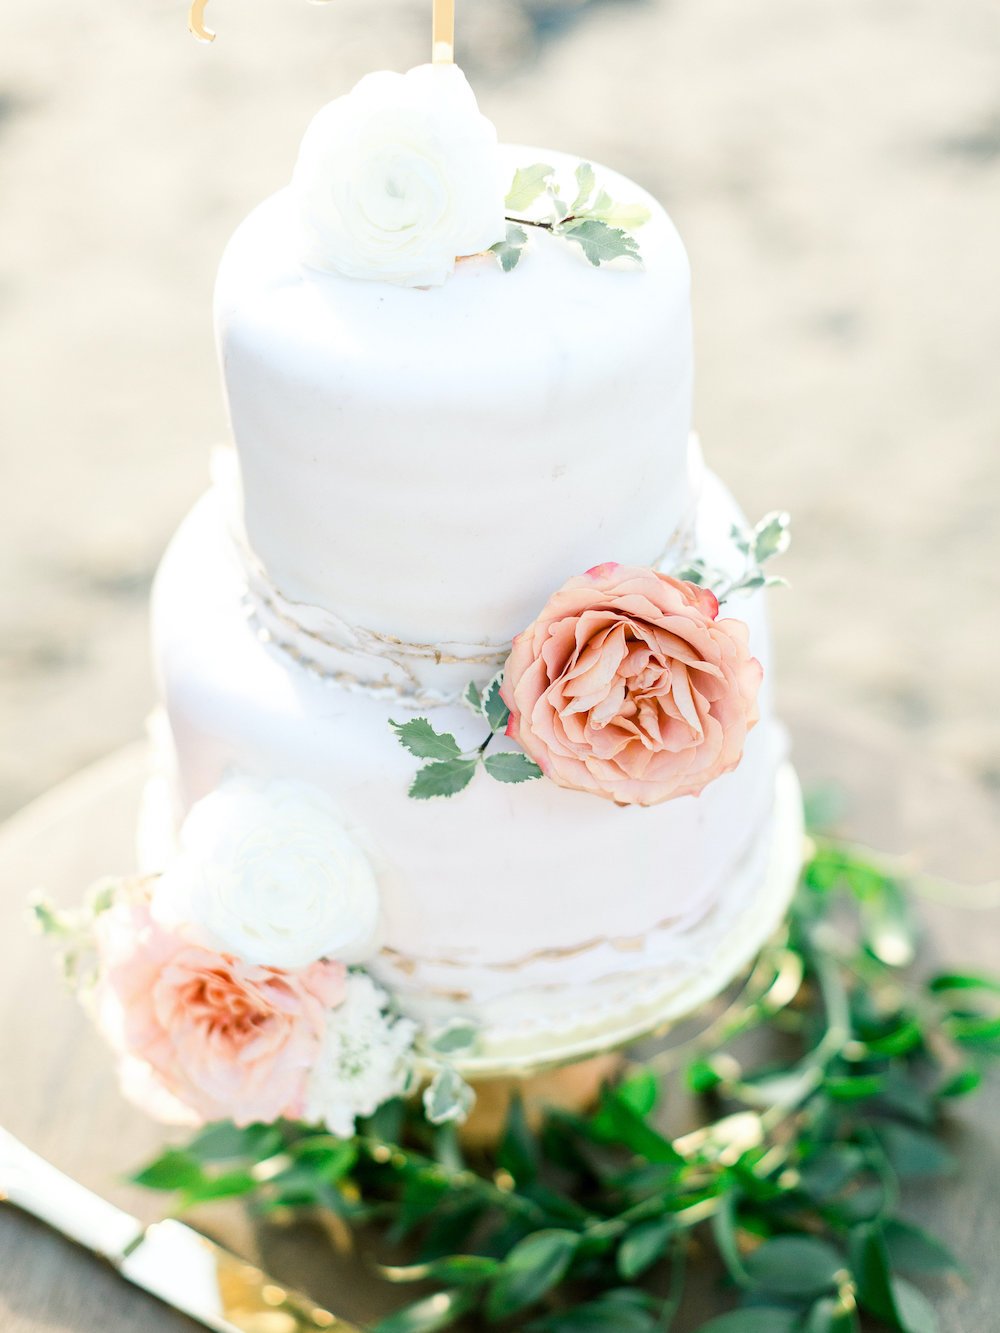 2-tier white fondant wedding cake with flowers.